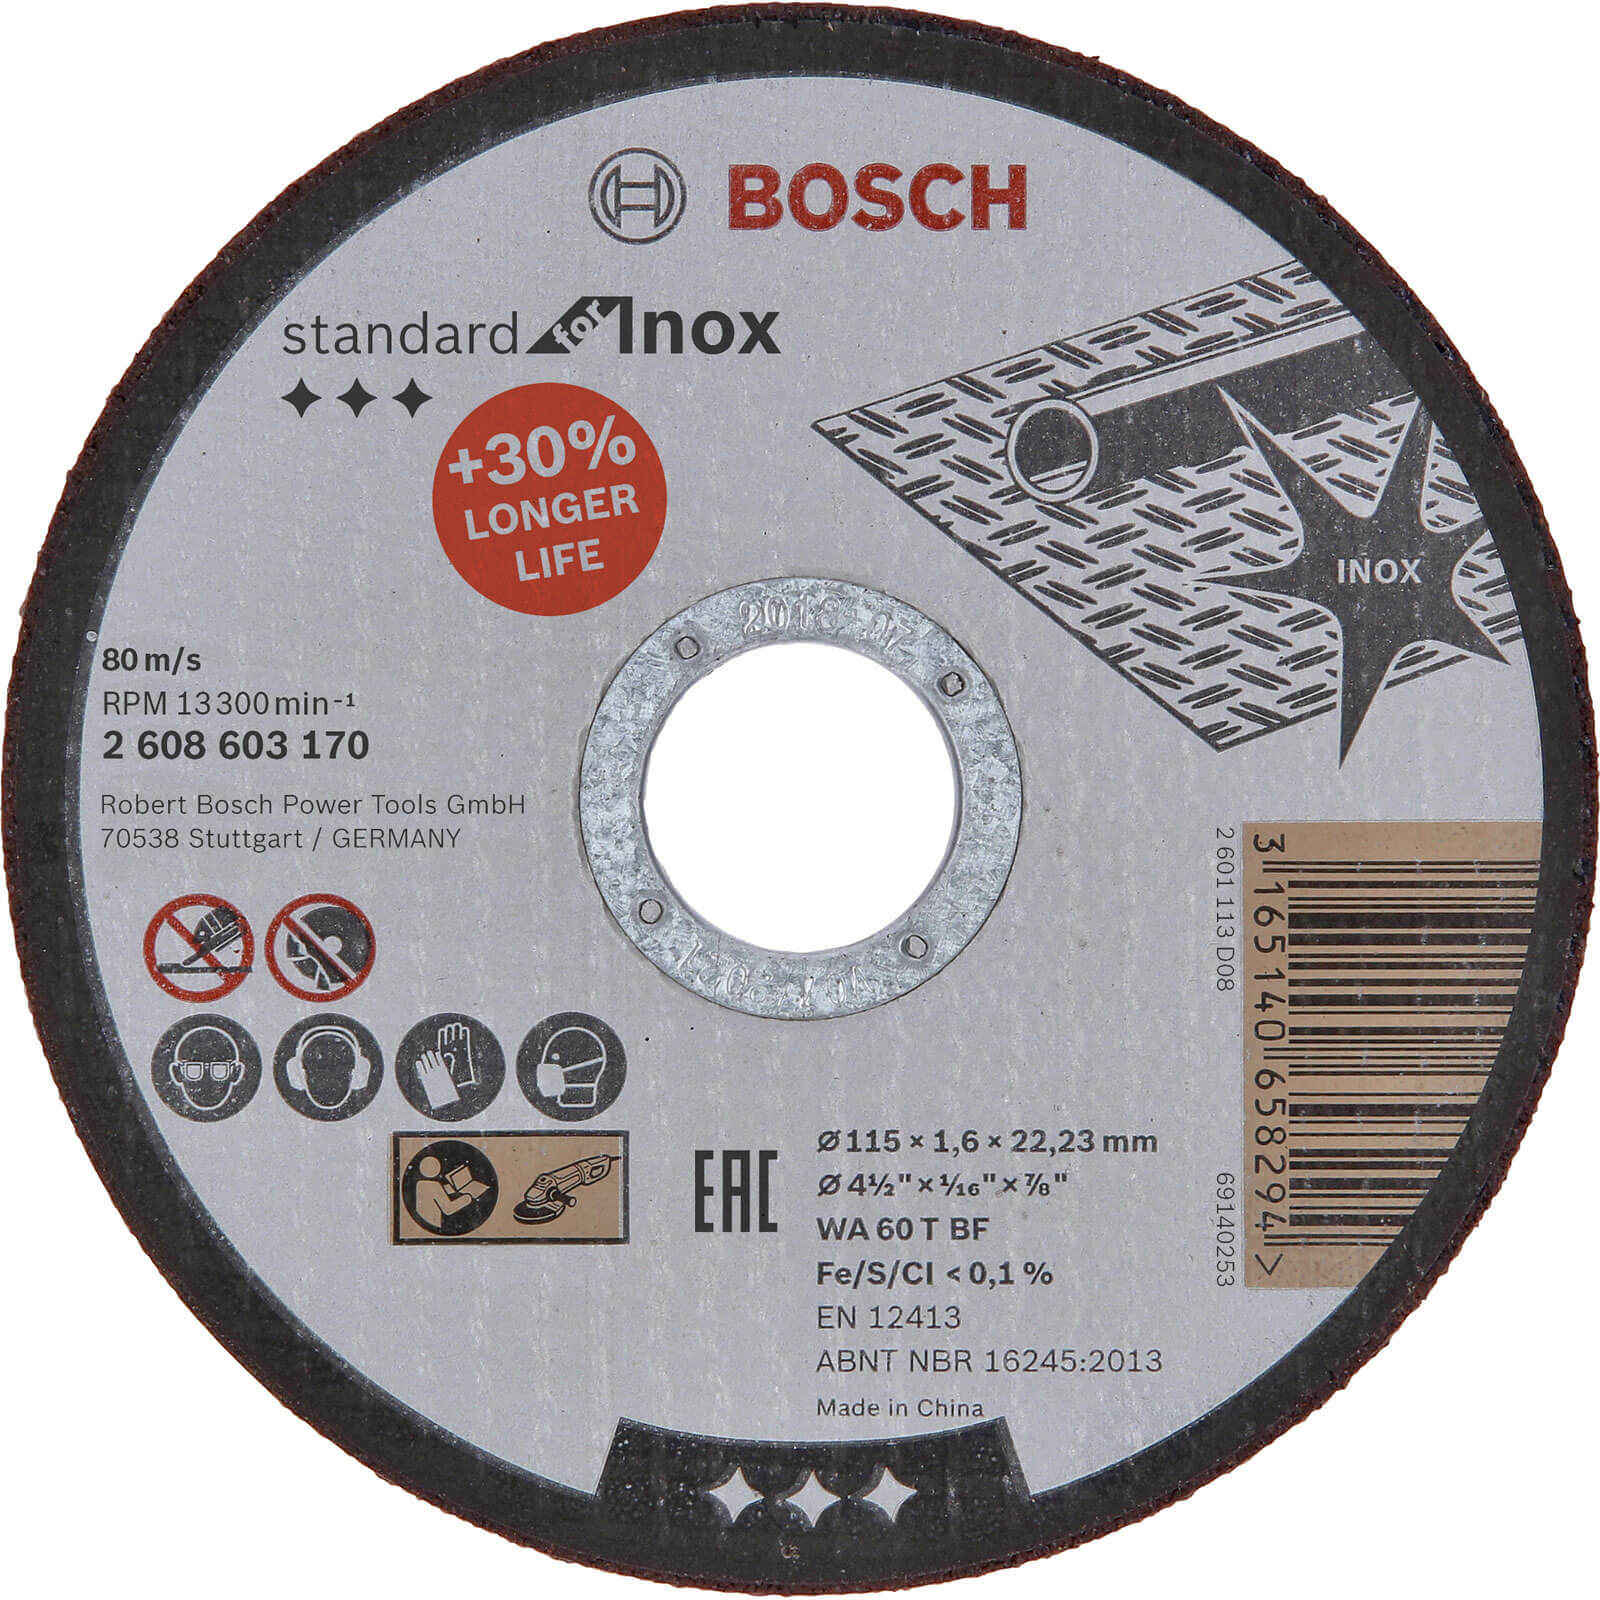 Image of Bosch Standard Inox Cutting Disc 115mm 1.6mm 22mm